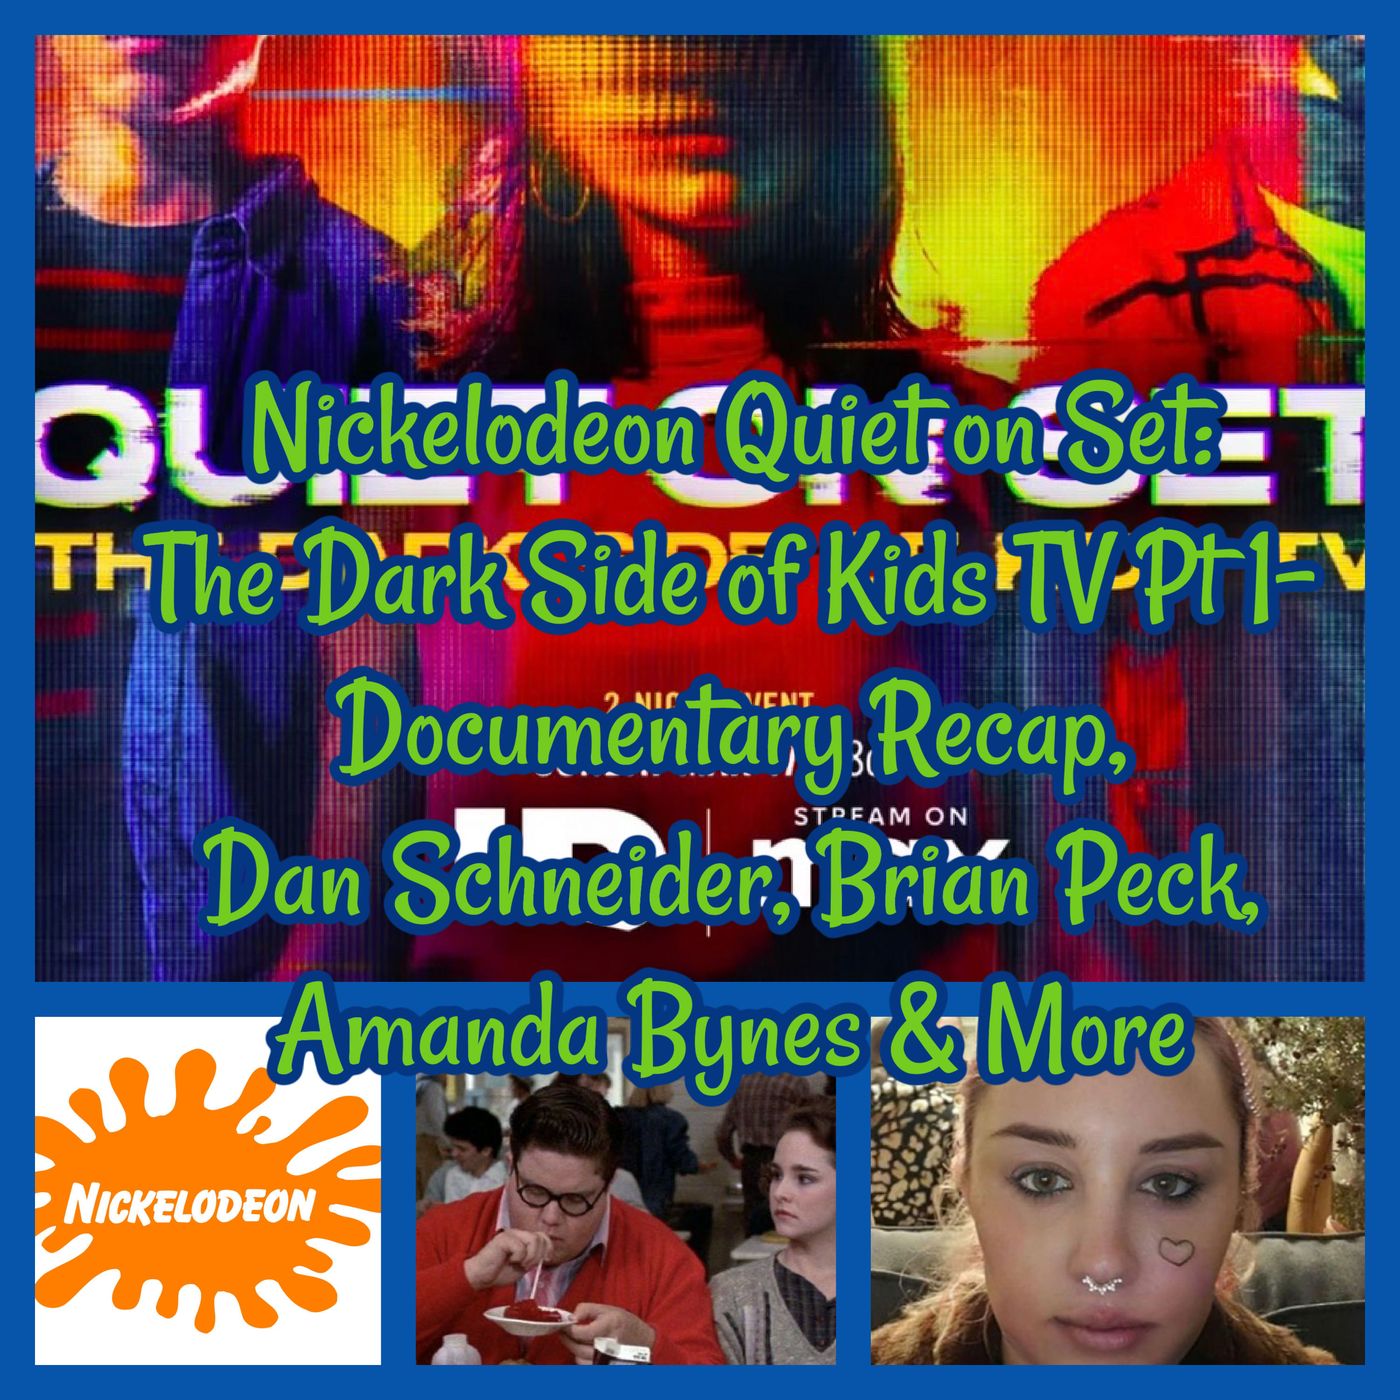 Nickelodeon Quiet on Set: The Dark Side of Kids TV Pt 1- Documentary Recap, Dan Schneider, Brian Peck, Amanda Bynes & More